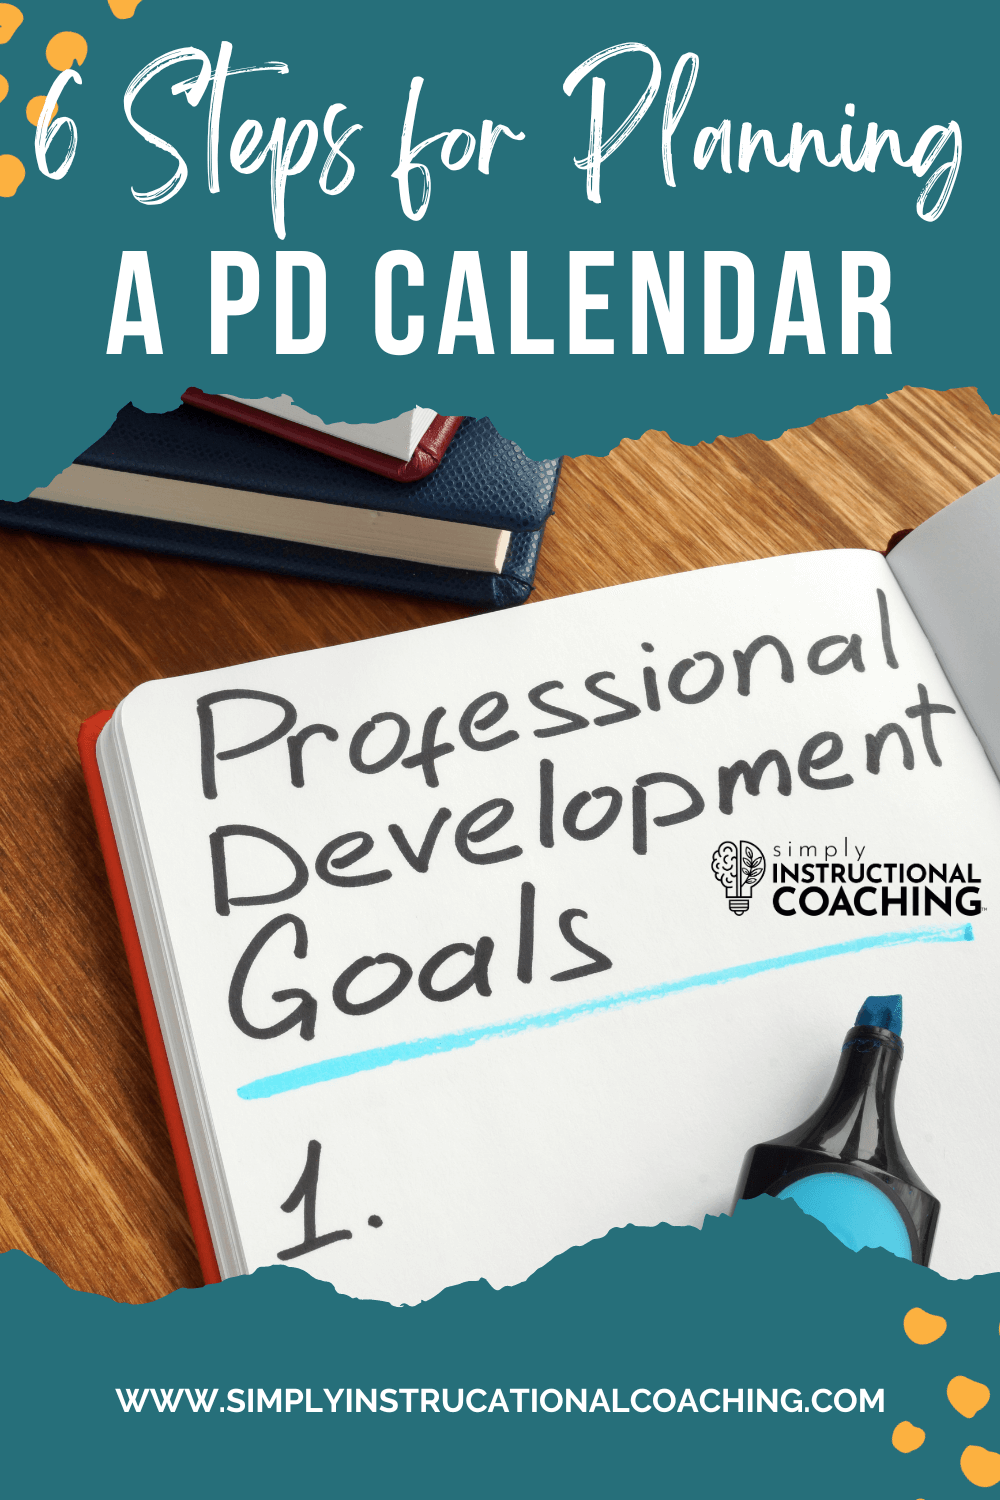 Six Steps for Planning a PD Calendar